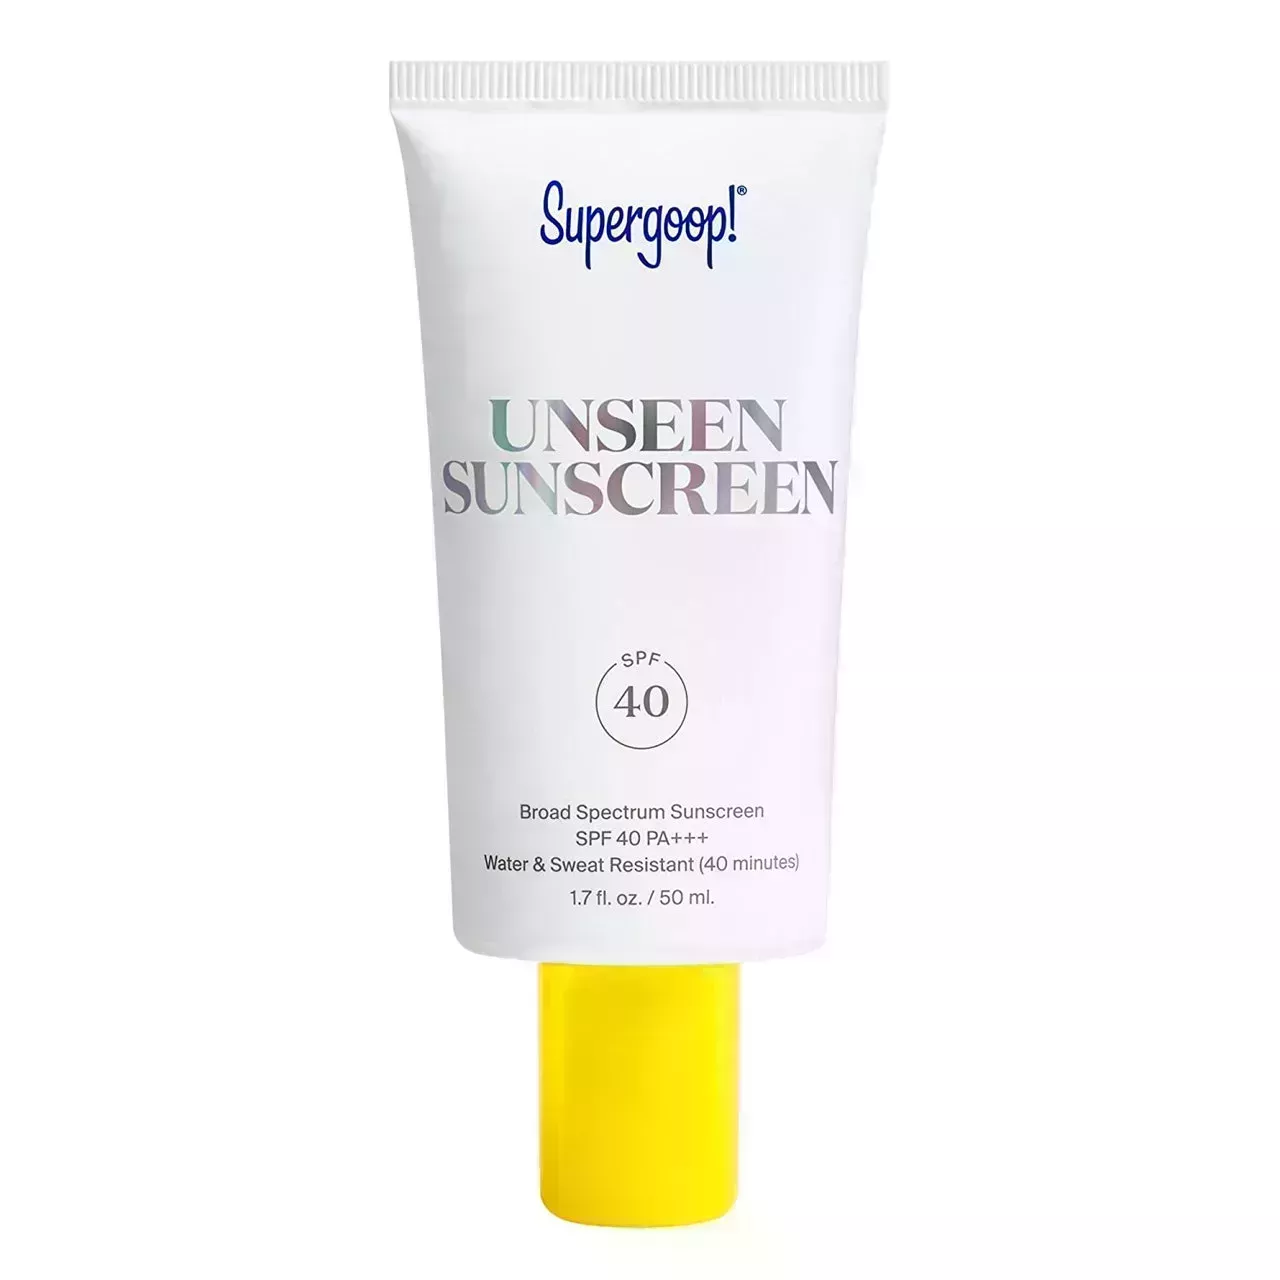 Supergoop Unseen Sunscreen SPF 40 on white background